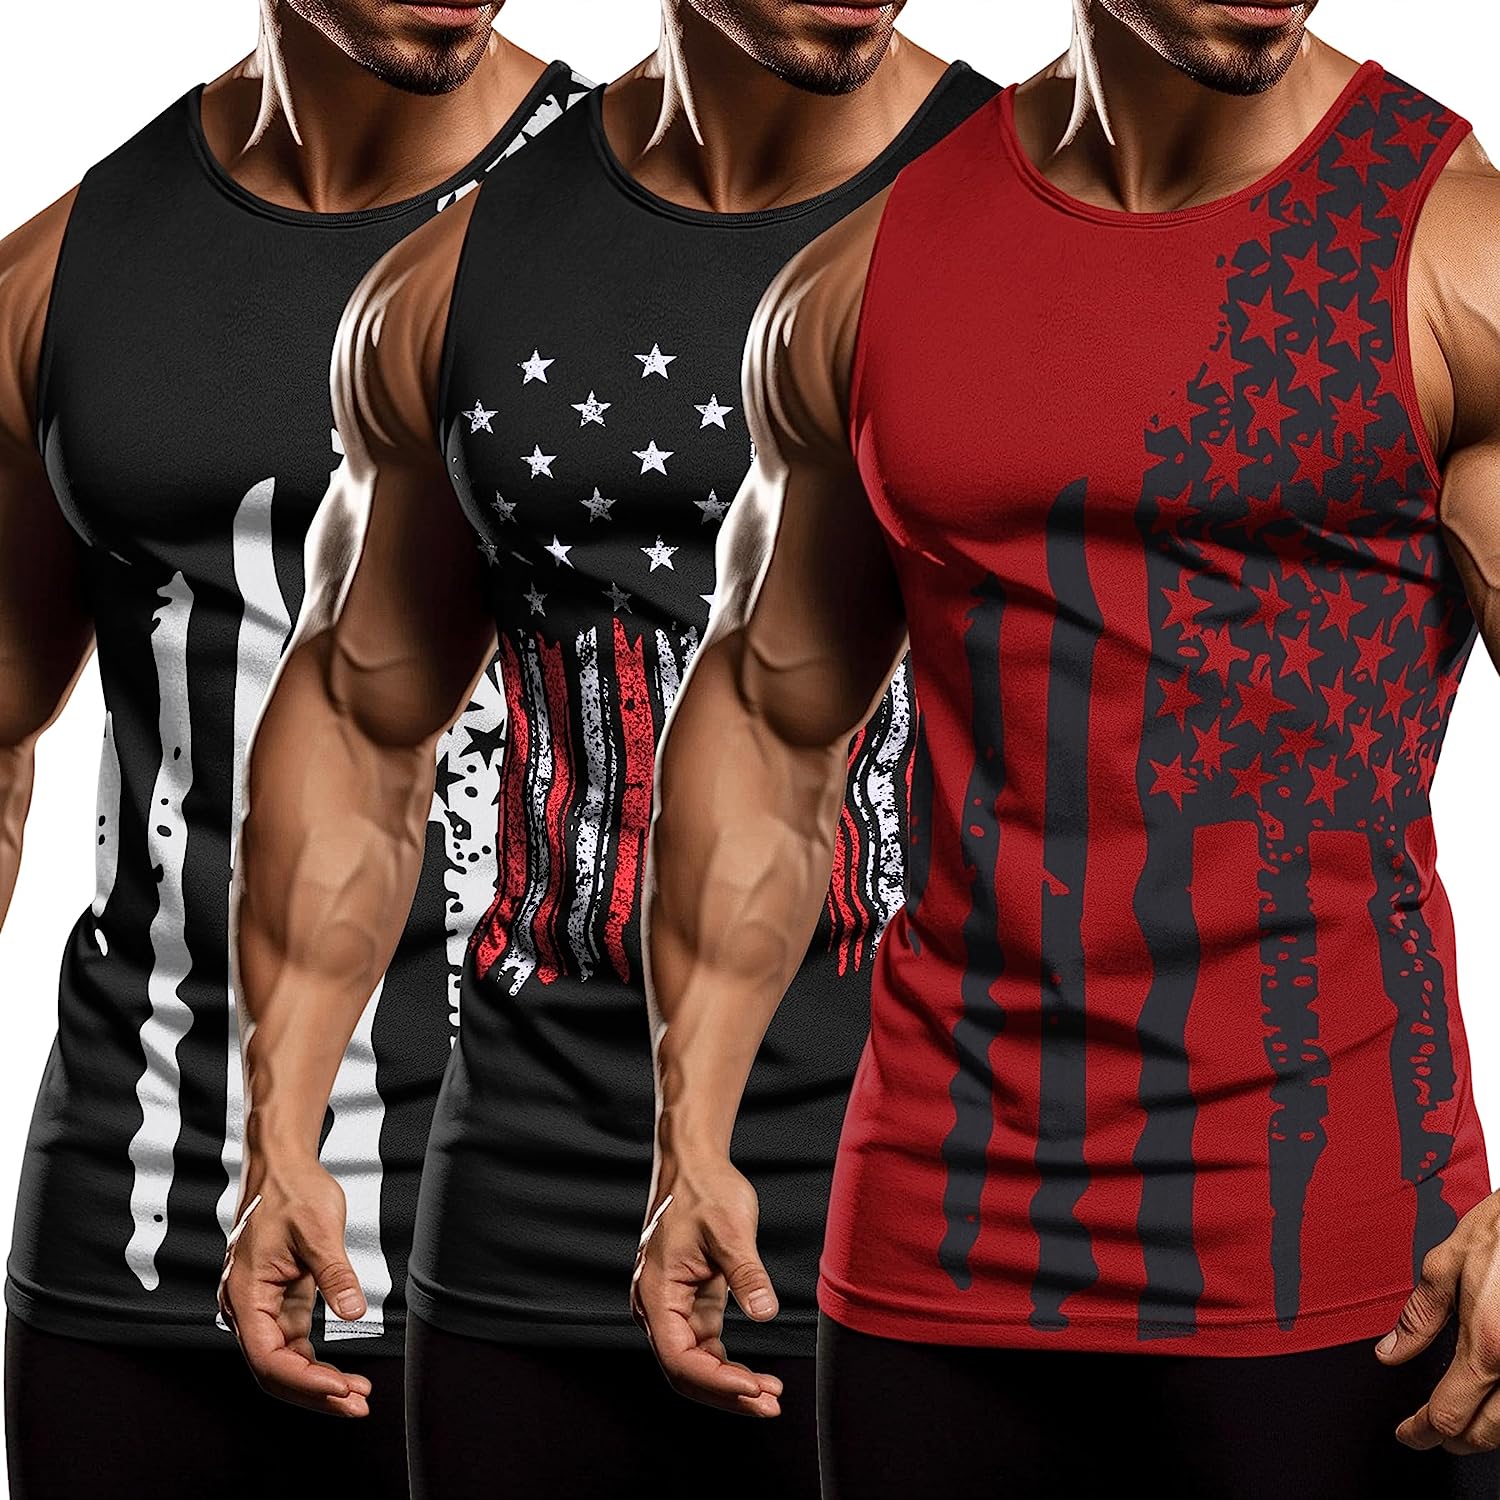 COOFANDY Men's 3 Pack Workout Tank Tops Sleeveless Gym Shirts